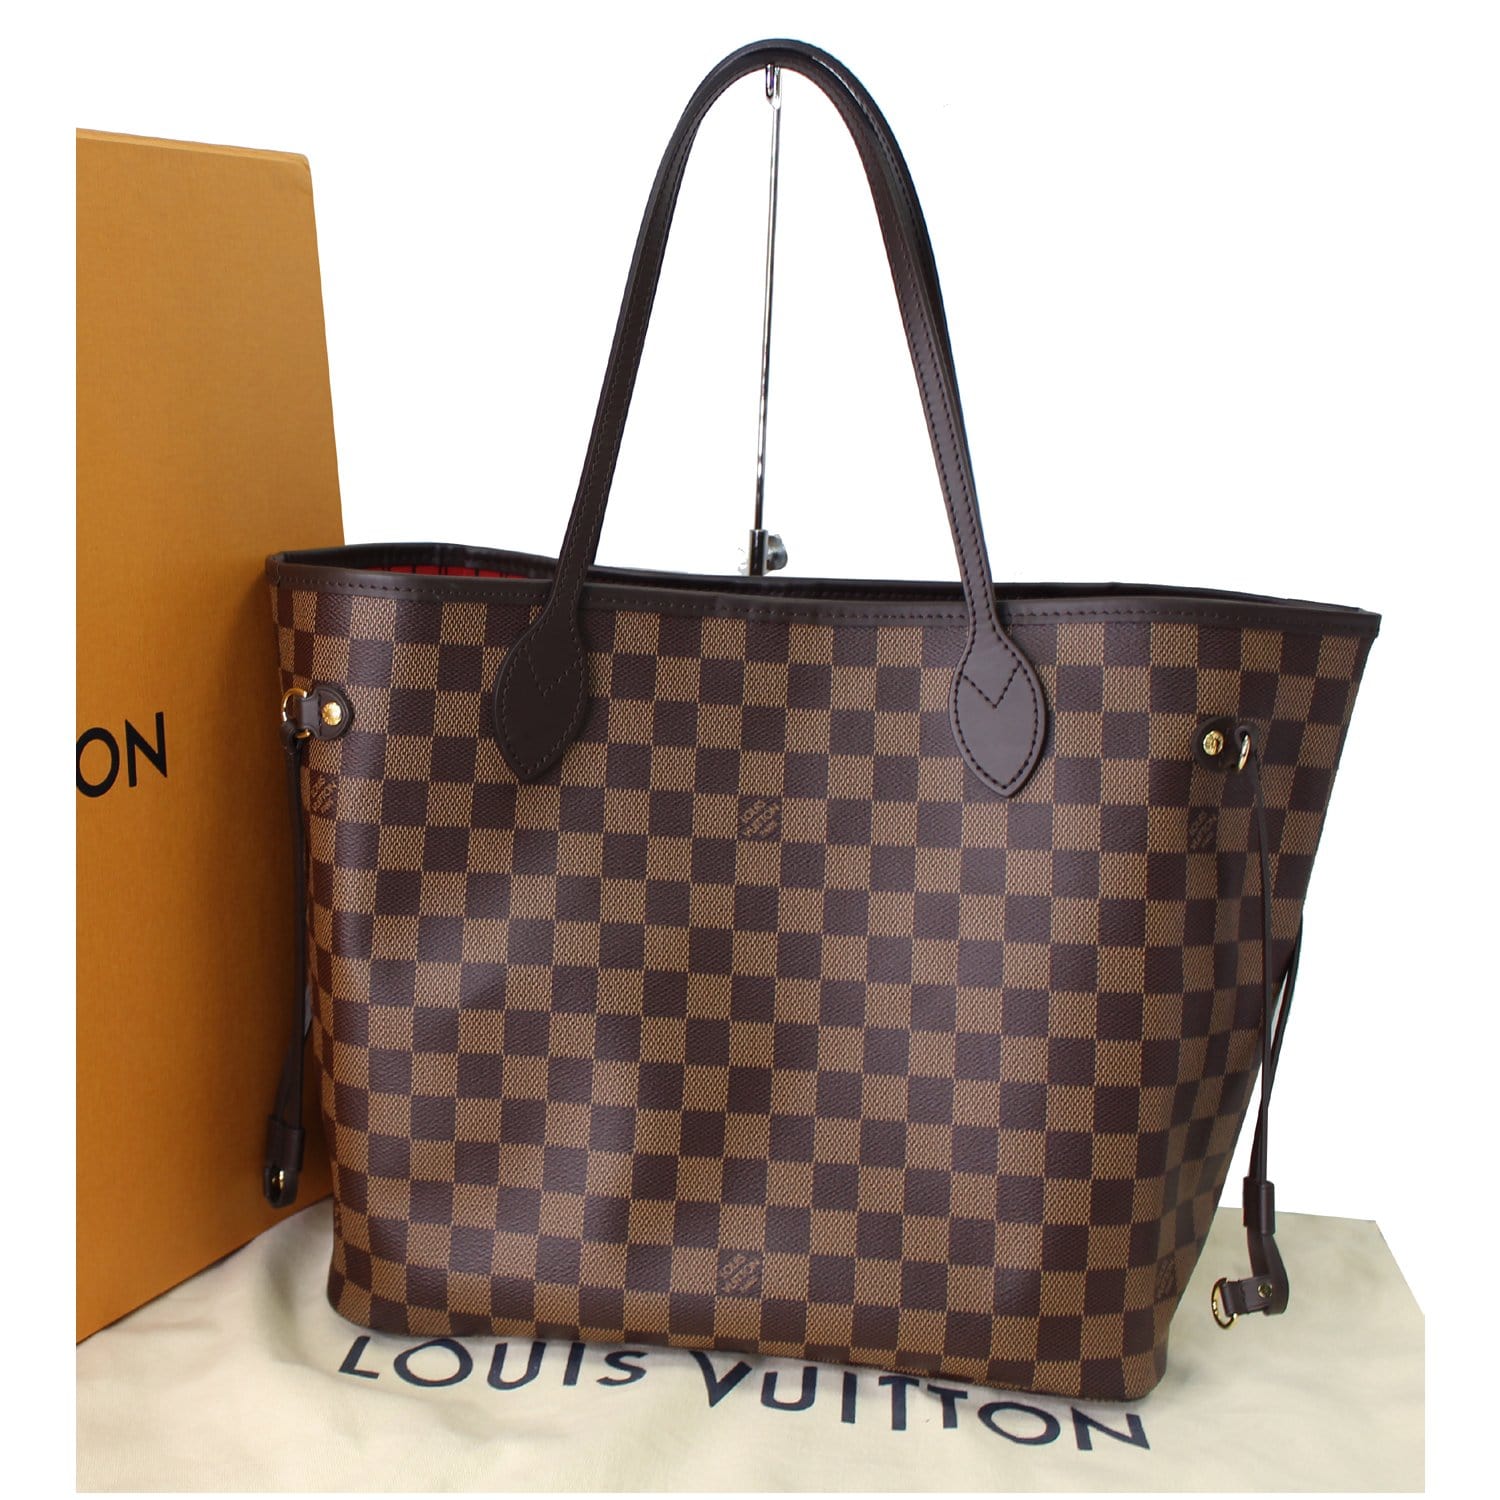 Bags, Louis Vuitton Neverfull Mm Damier Ebene Tote Bag